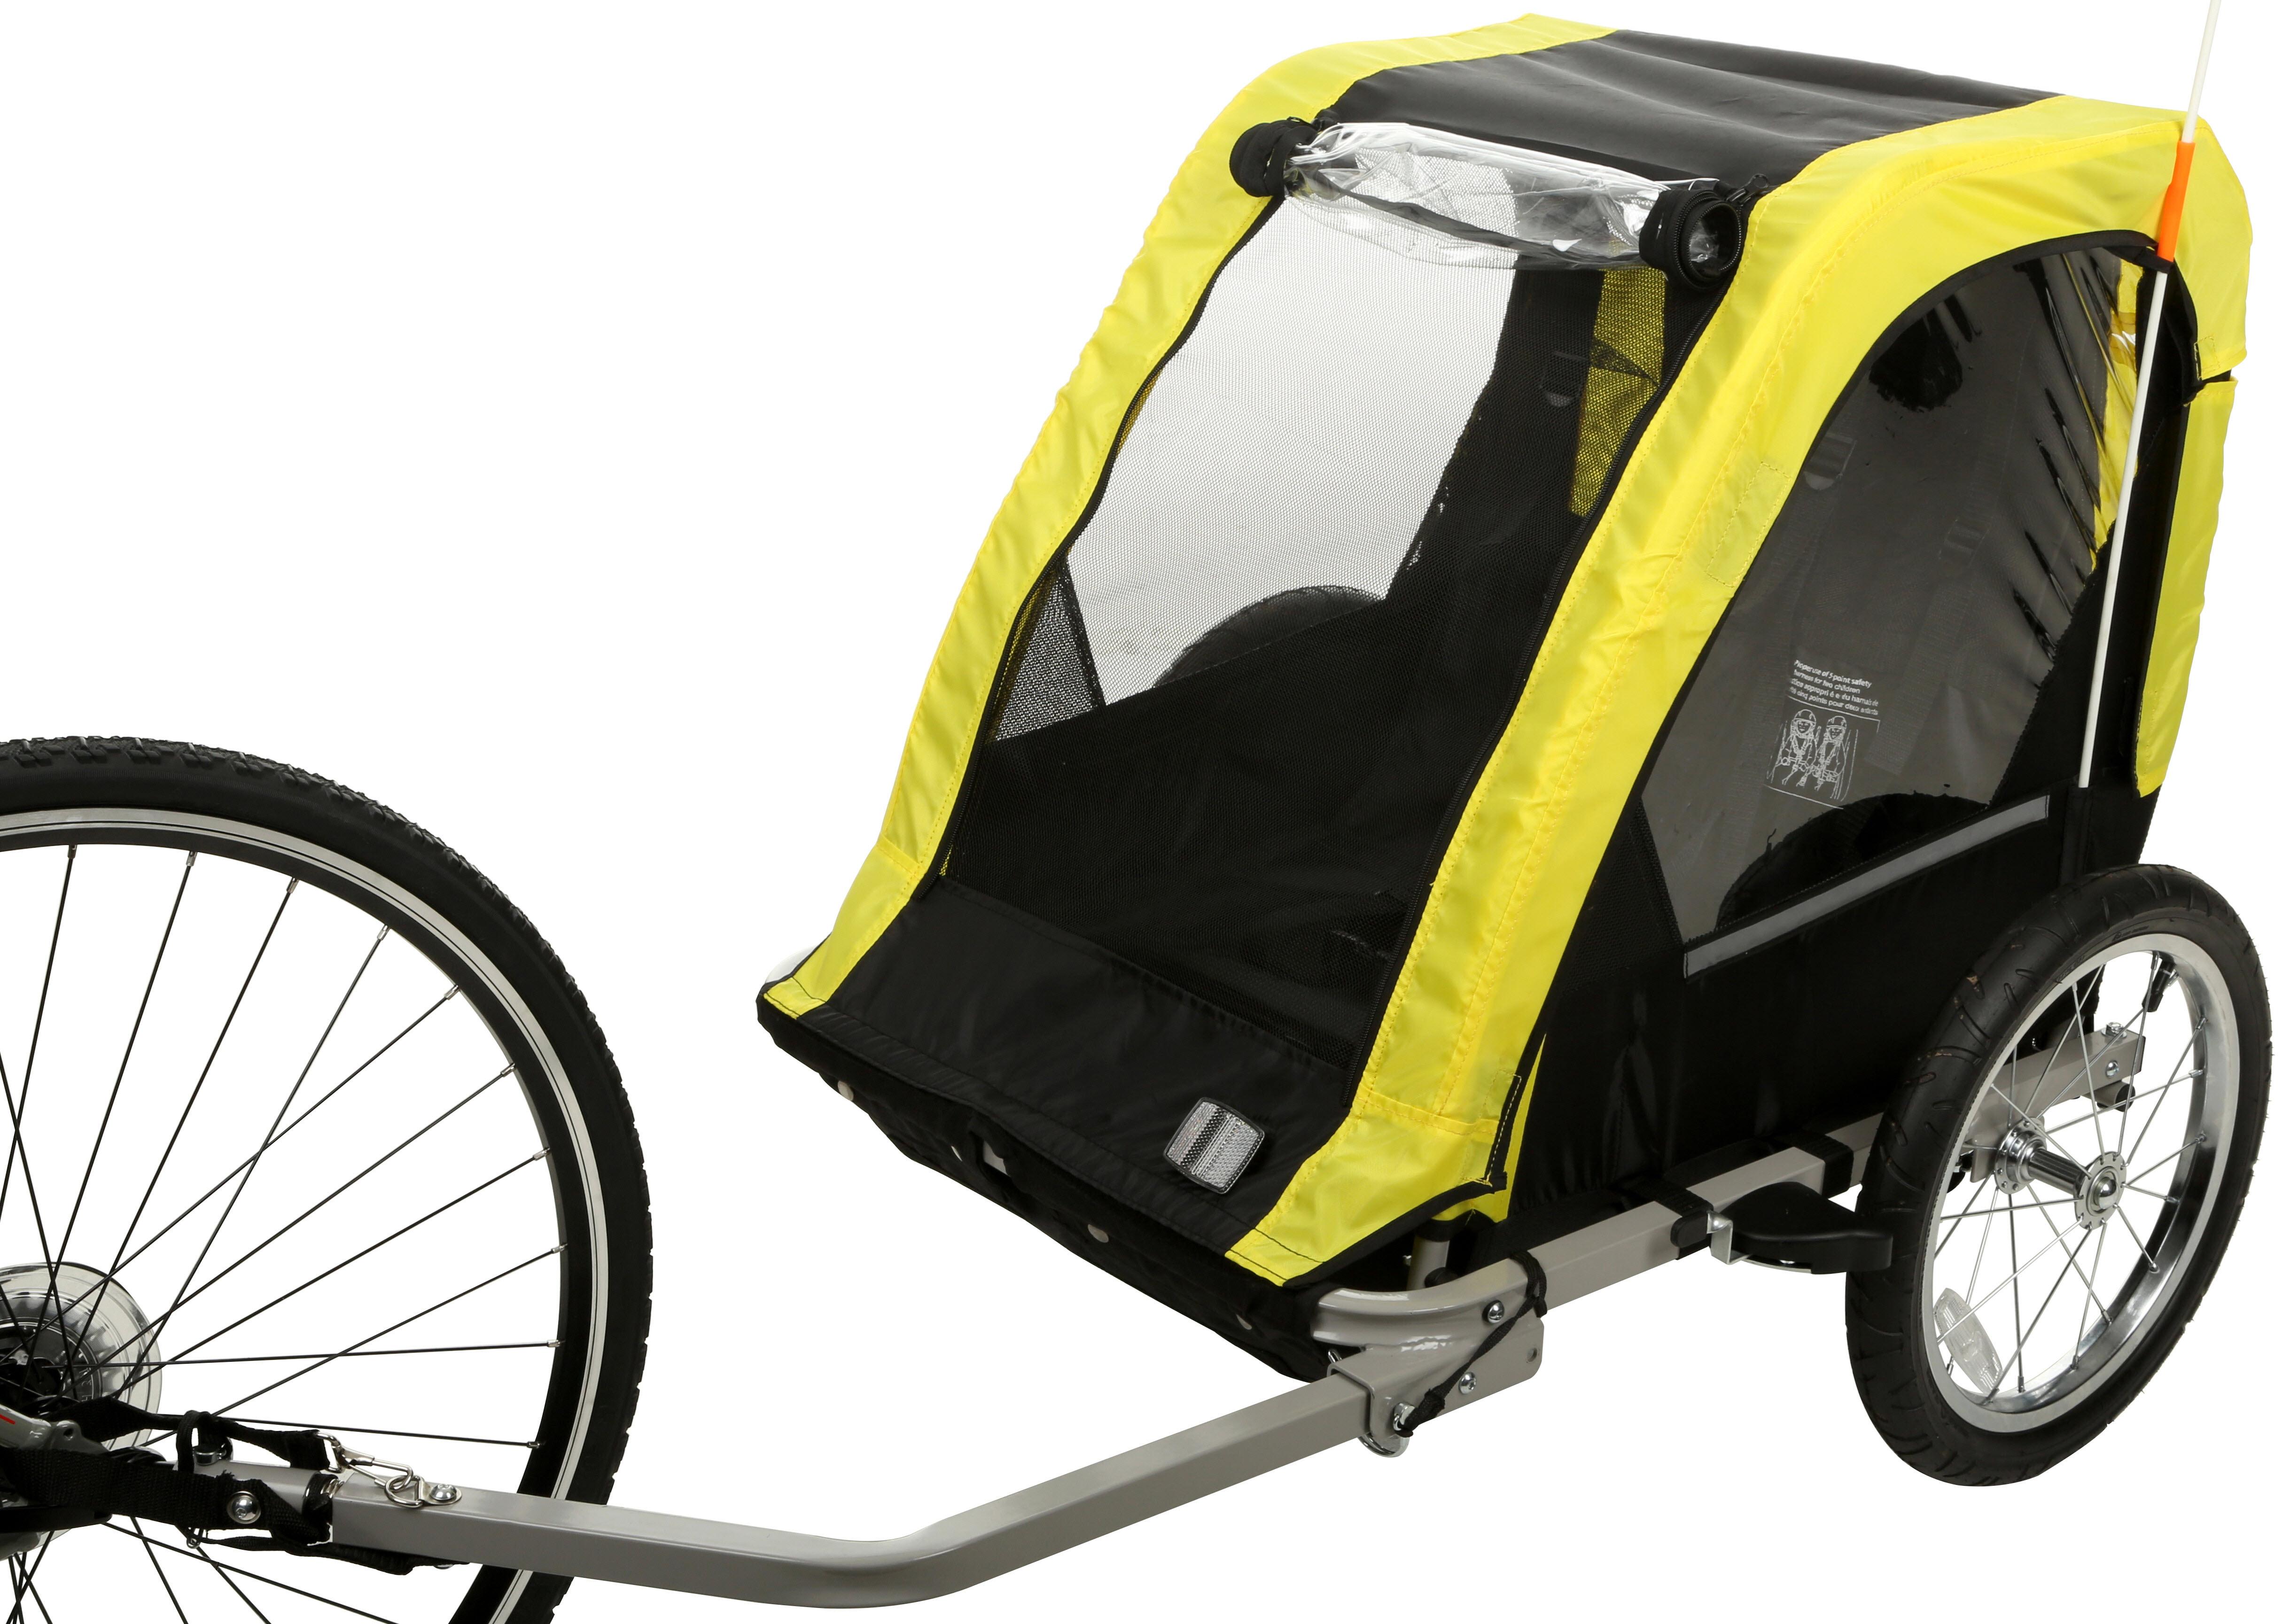 bike trailer child carrier